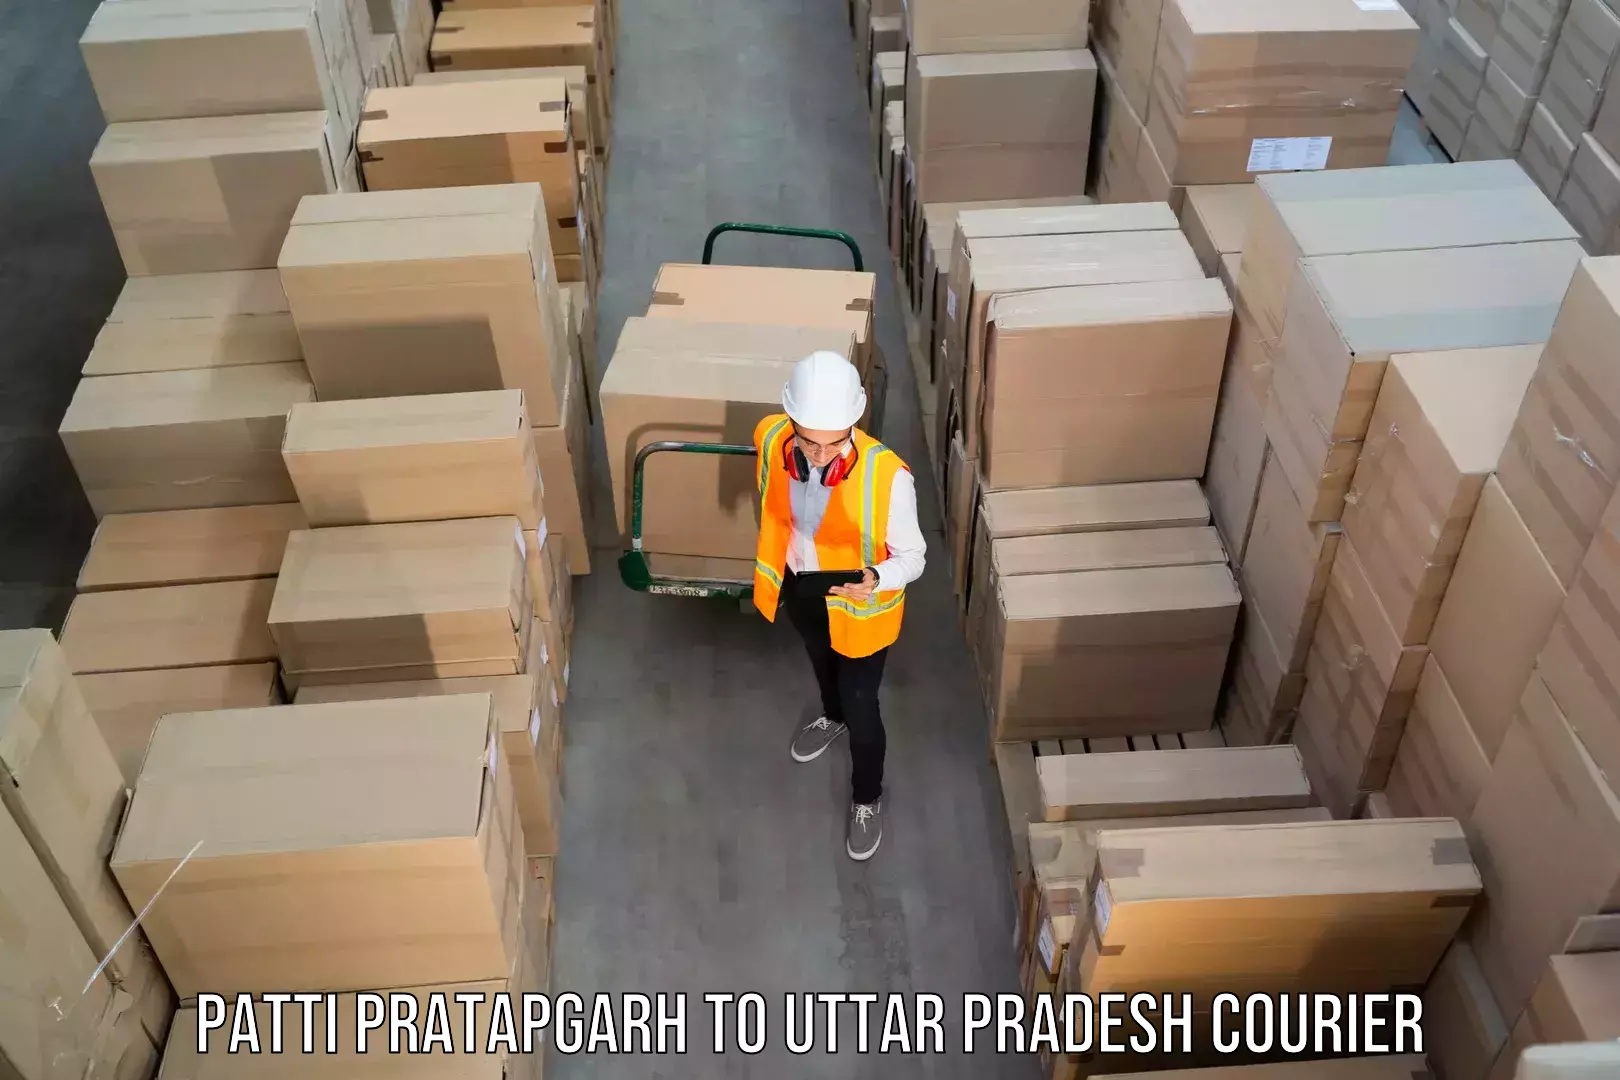 Reliable courier service Patti Pratapgarh to Shikohabad